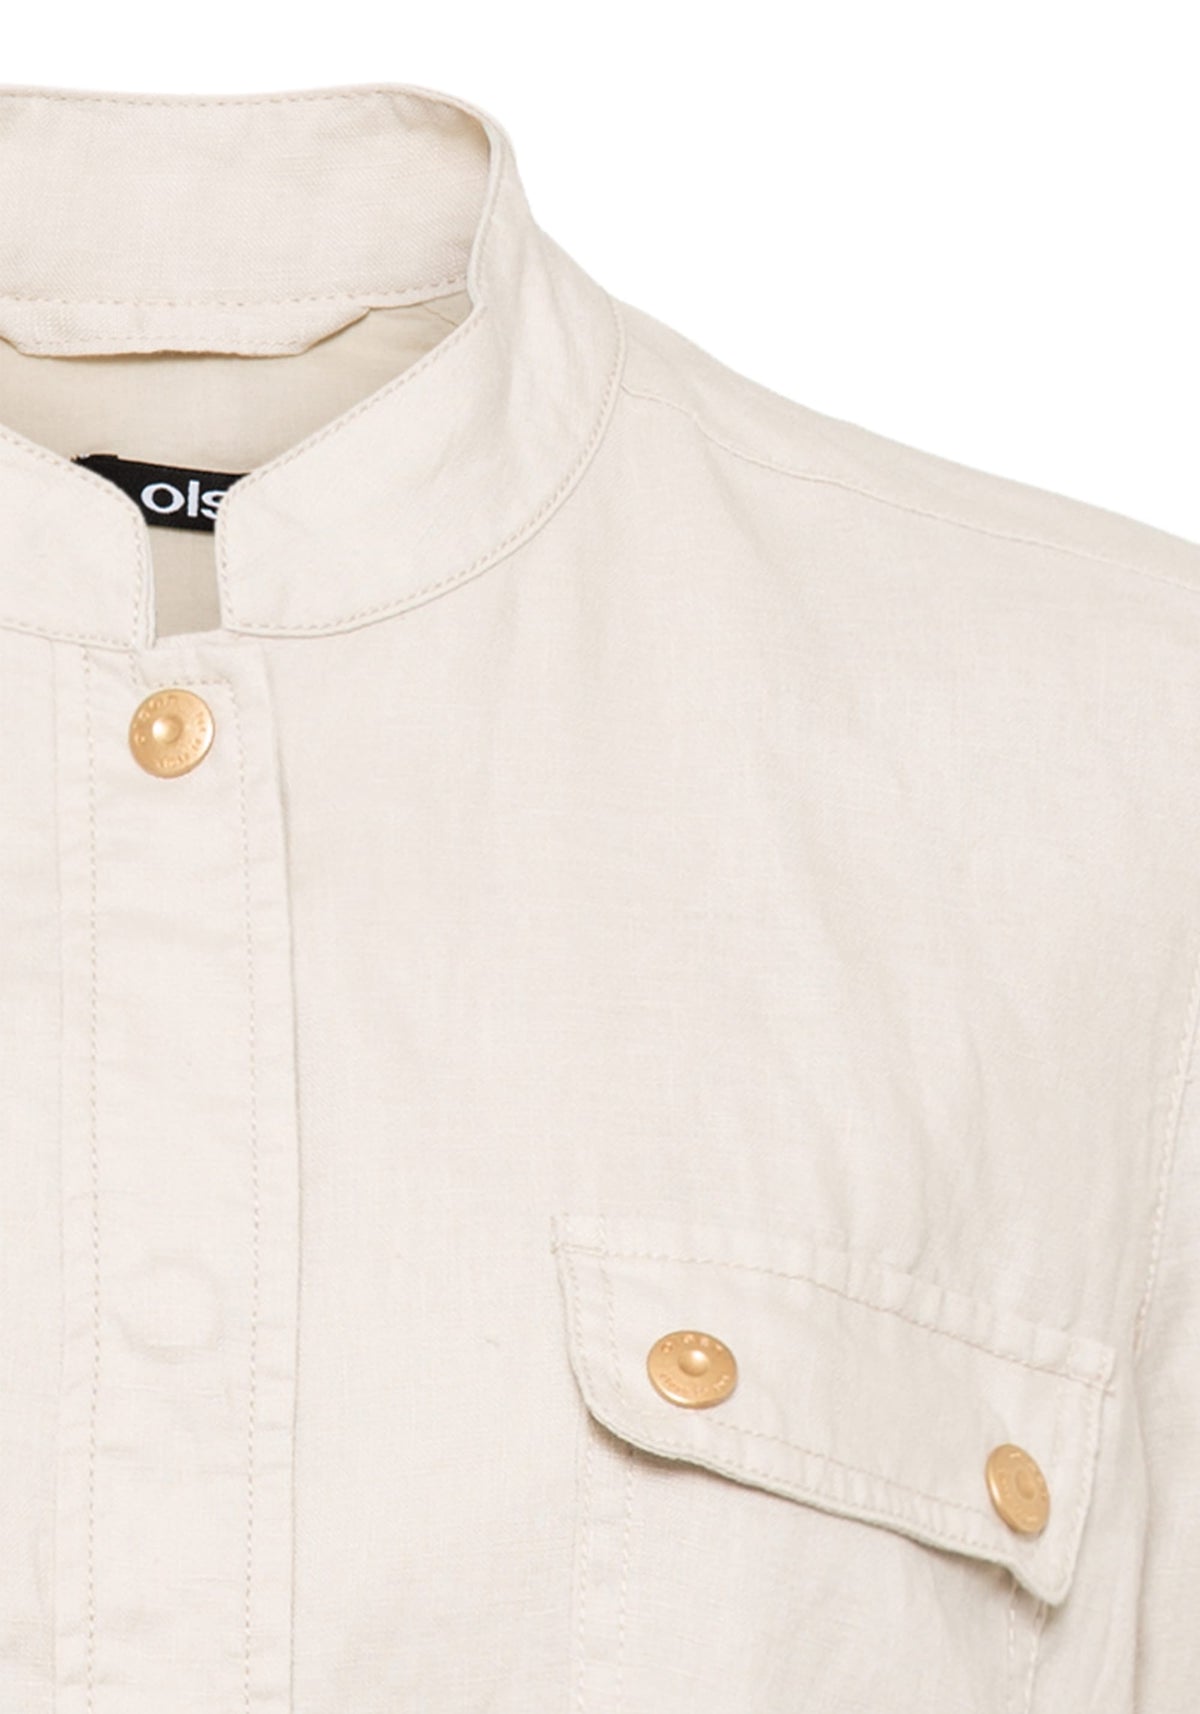 100% Linen Long Sleeve Safari Inspired Jacket